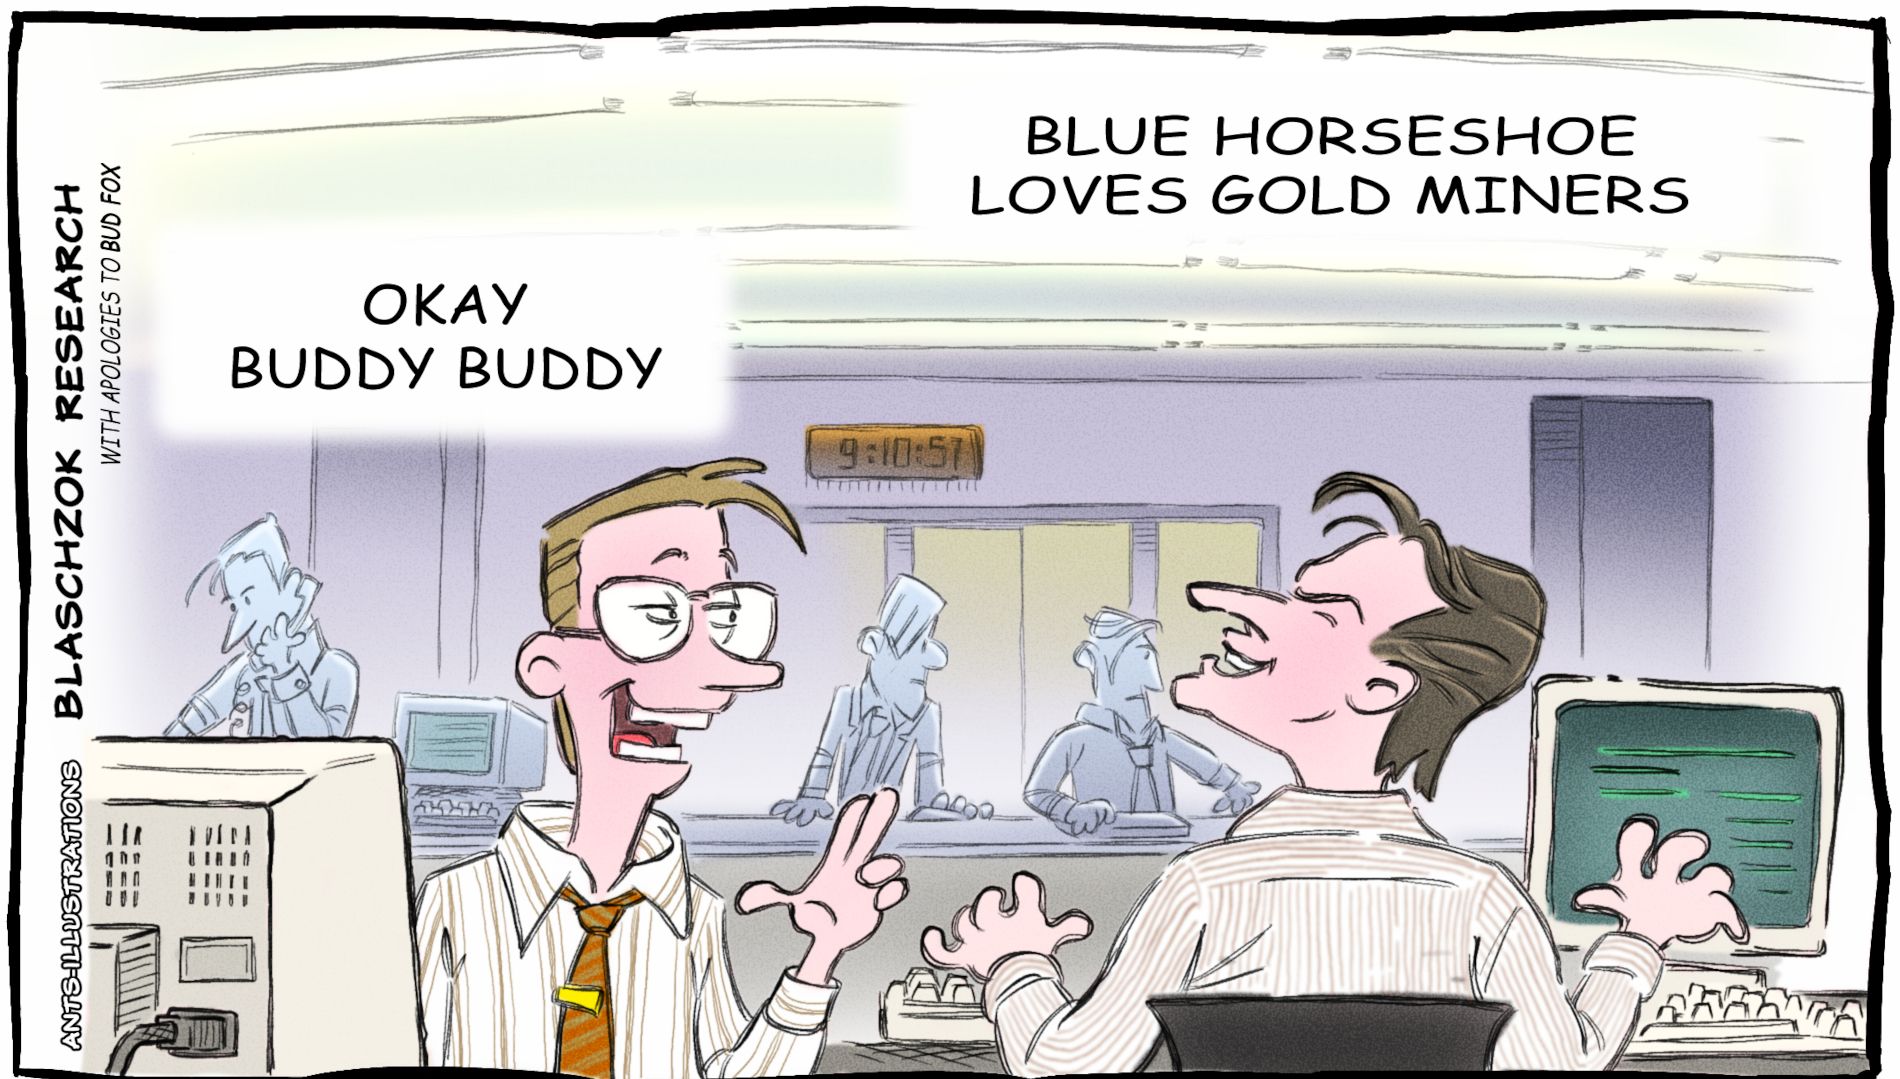 Blue horseshoe loves gold miners